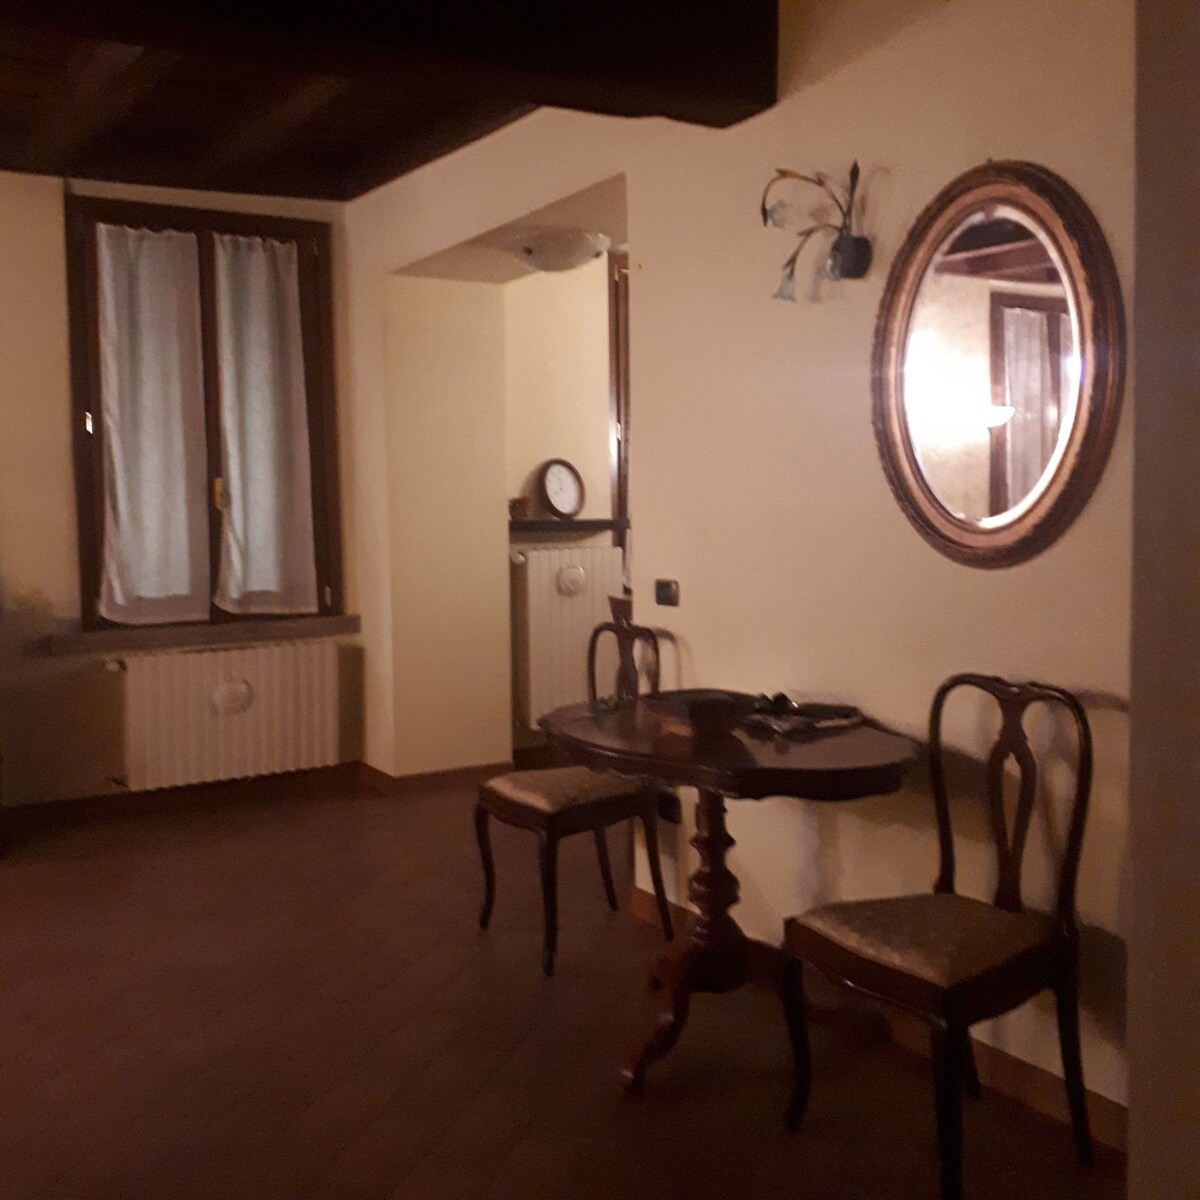 Mantua公寓很漂亮